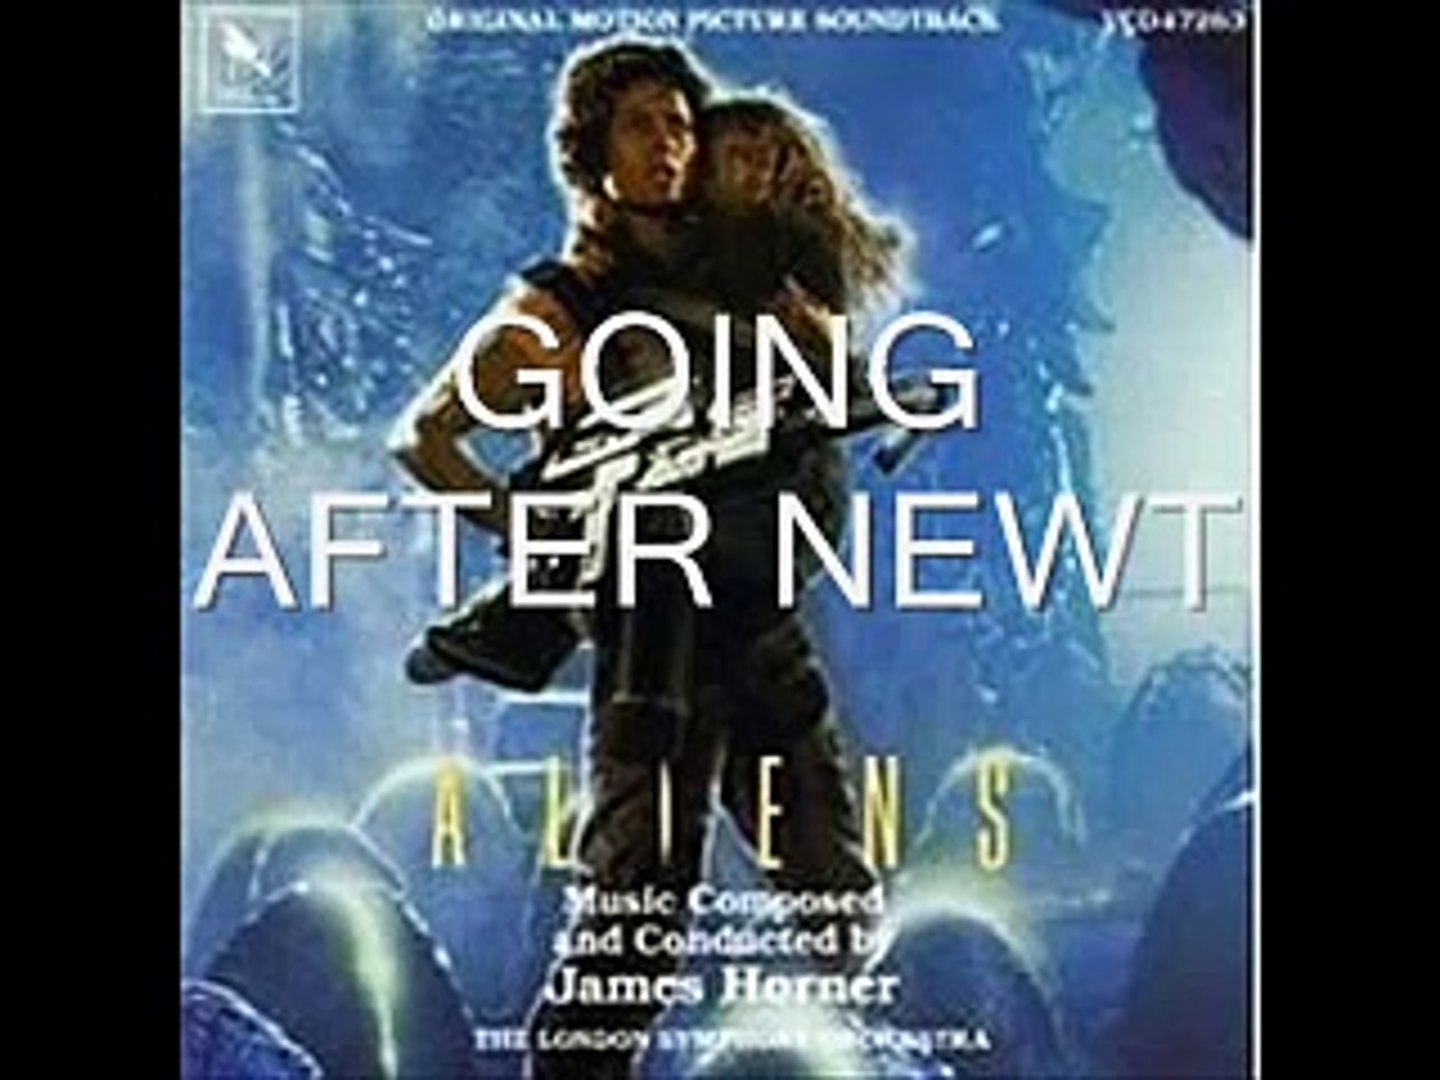 Going After Newt- Aliens